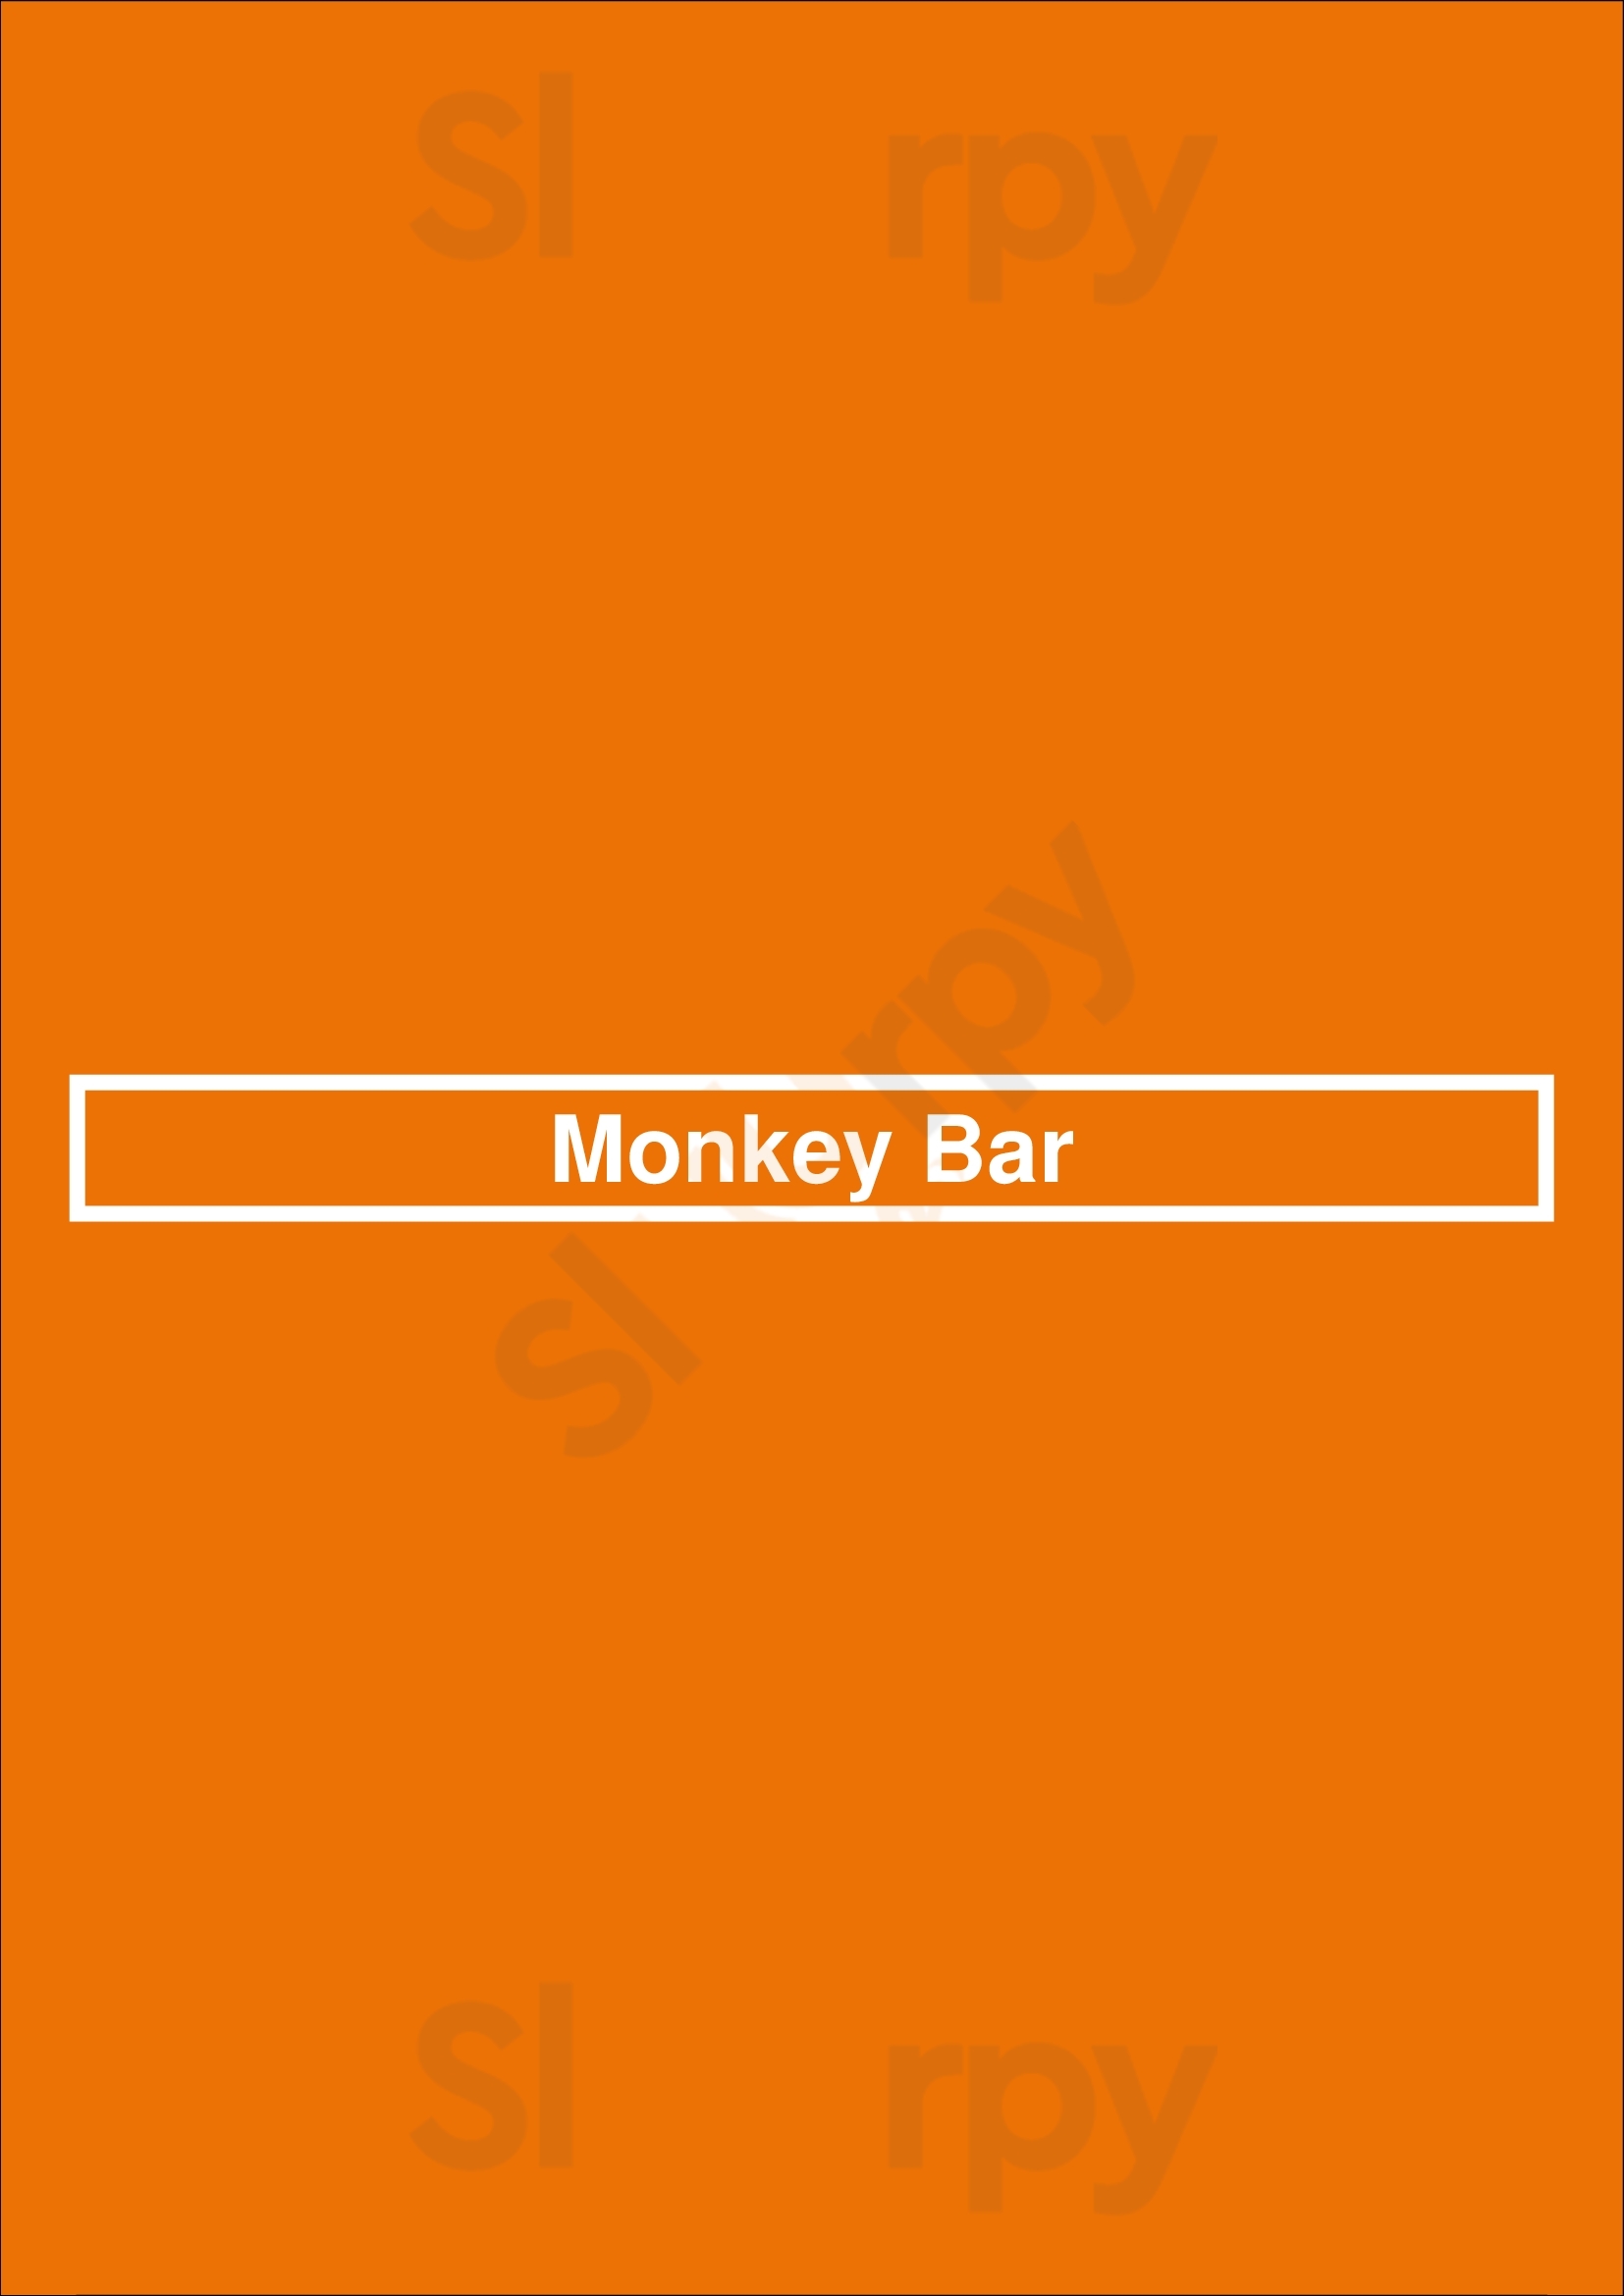 Monkey Bar New York City Menu - 1